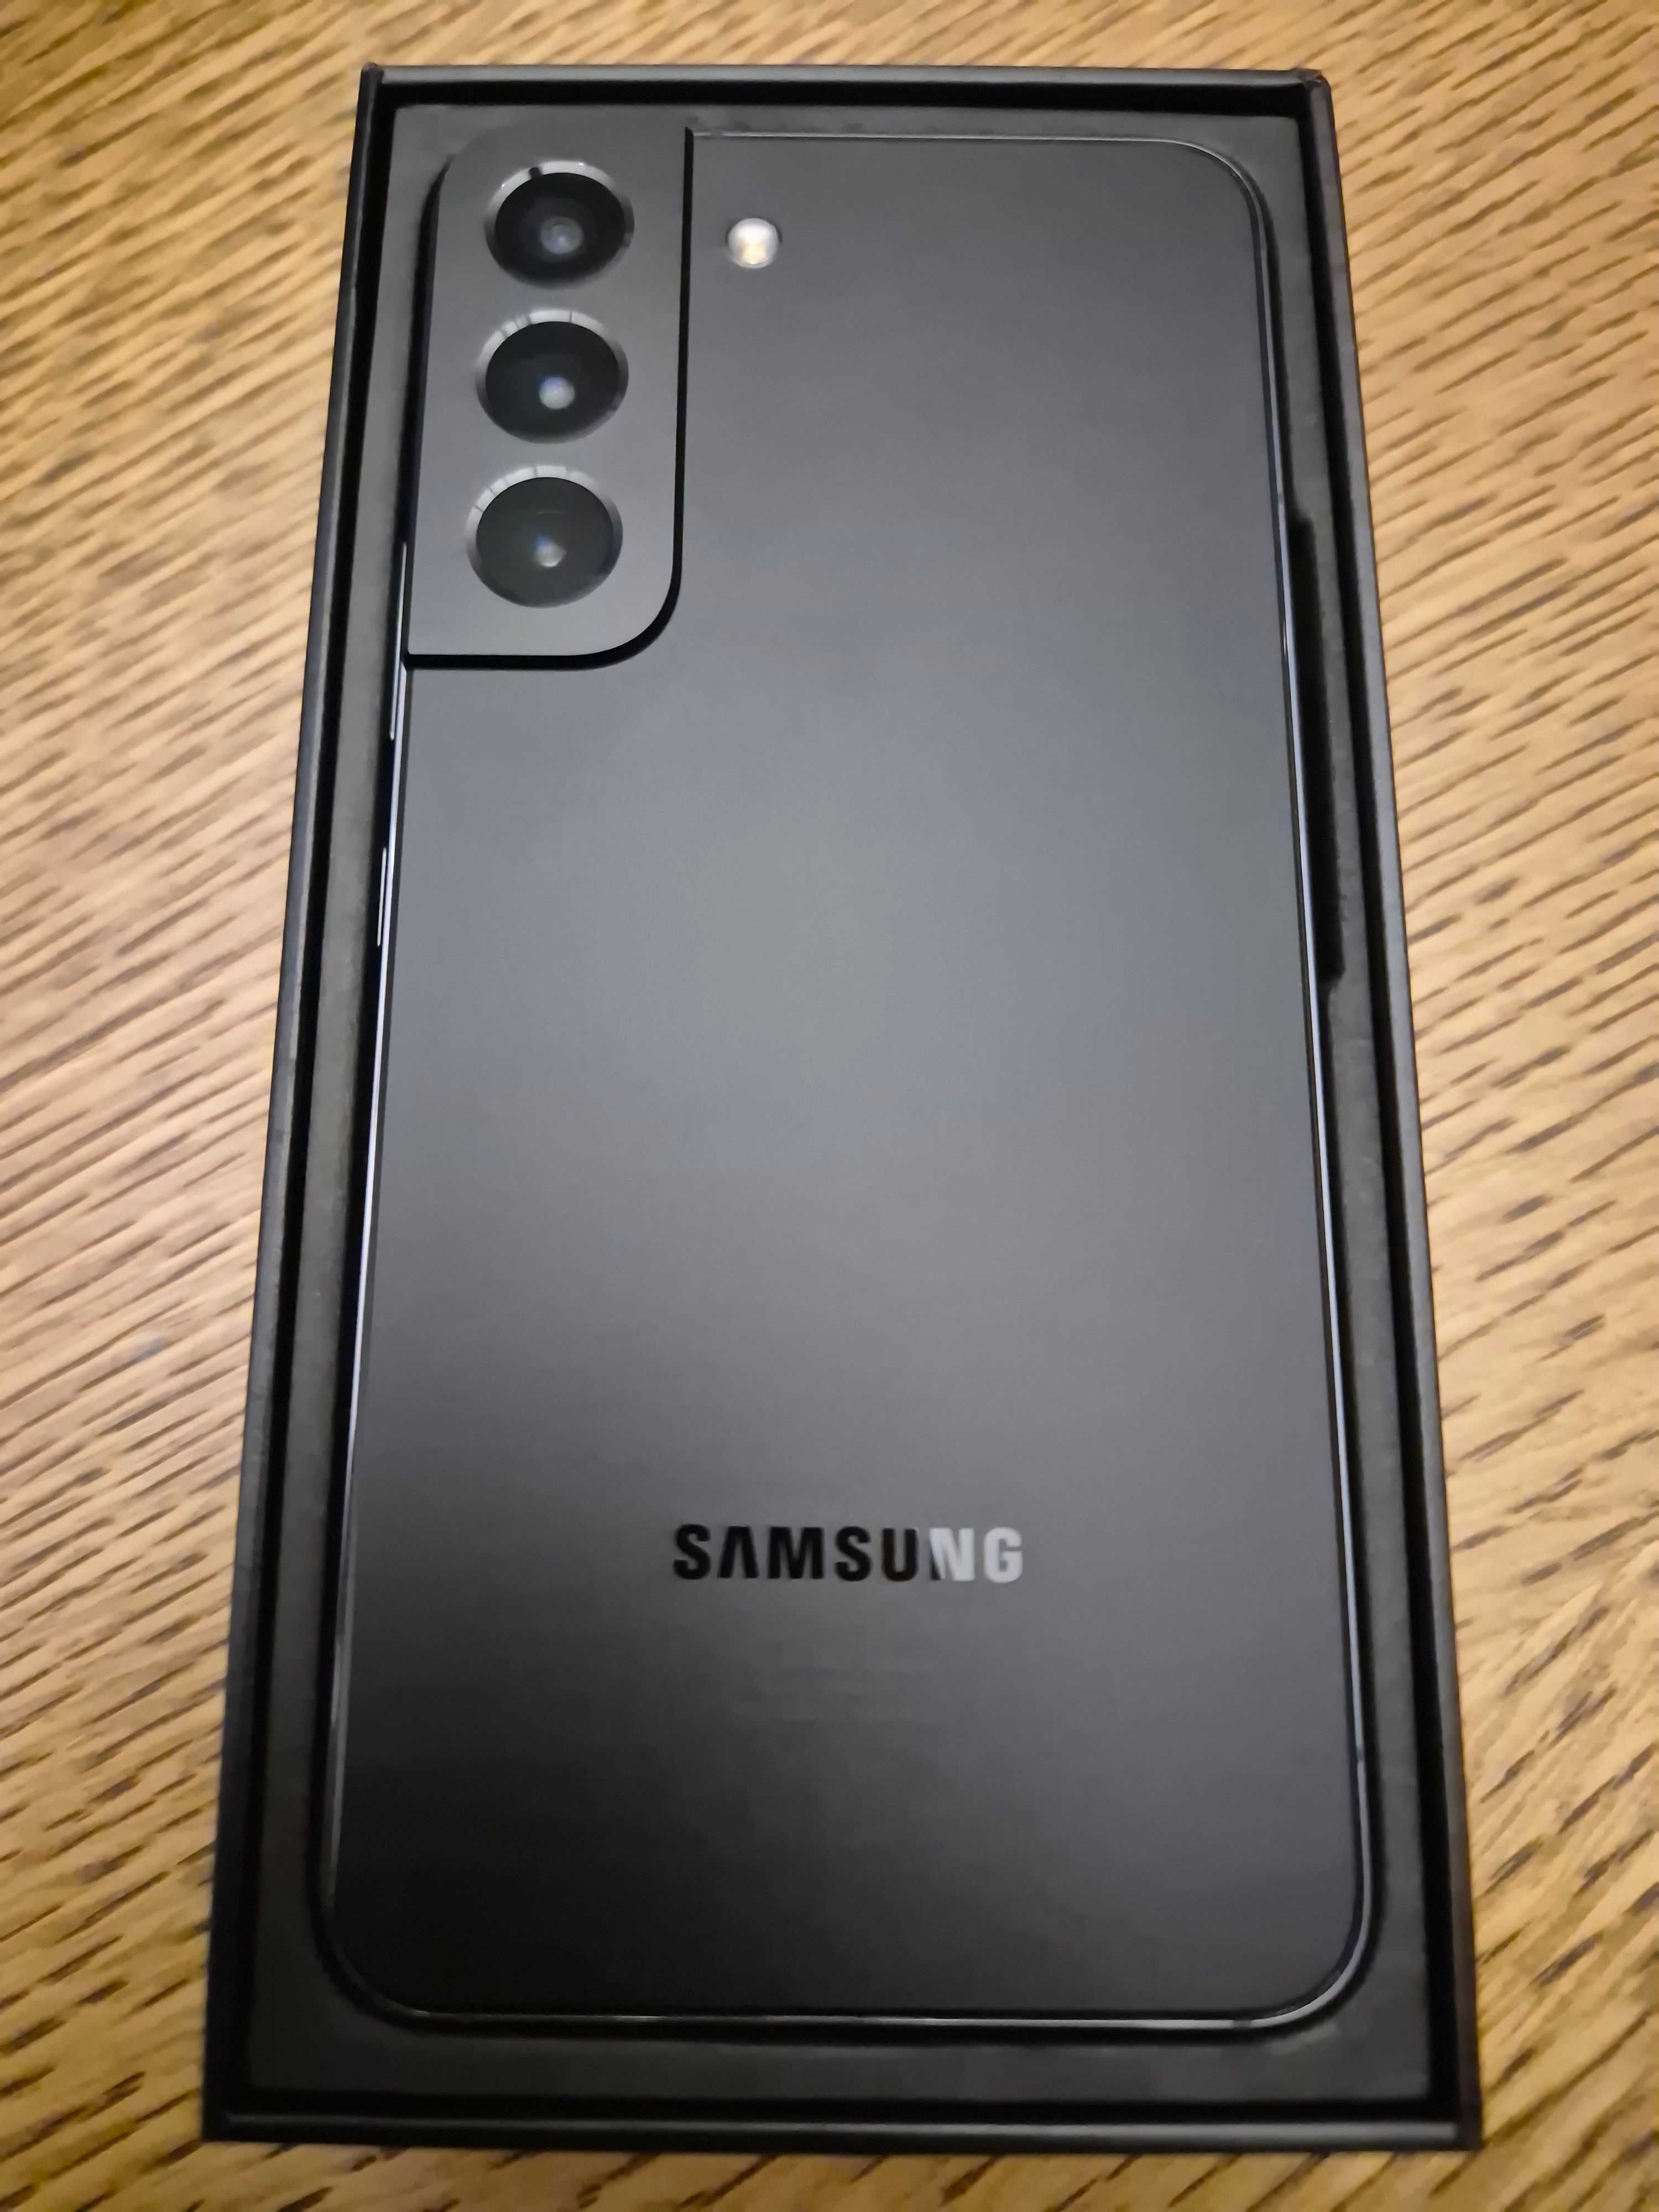 Samsung s22 256GB